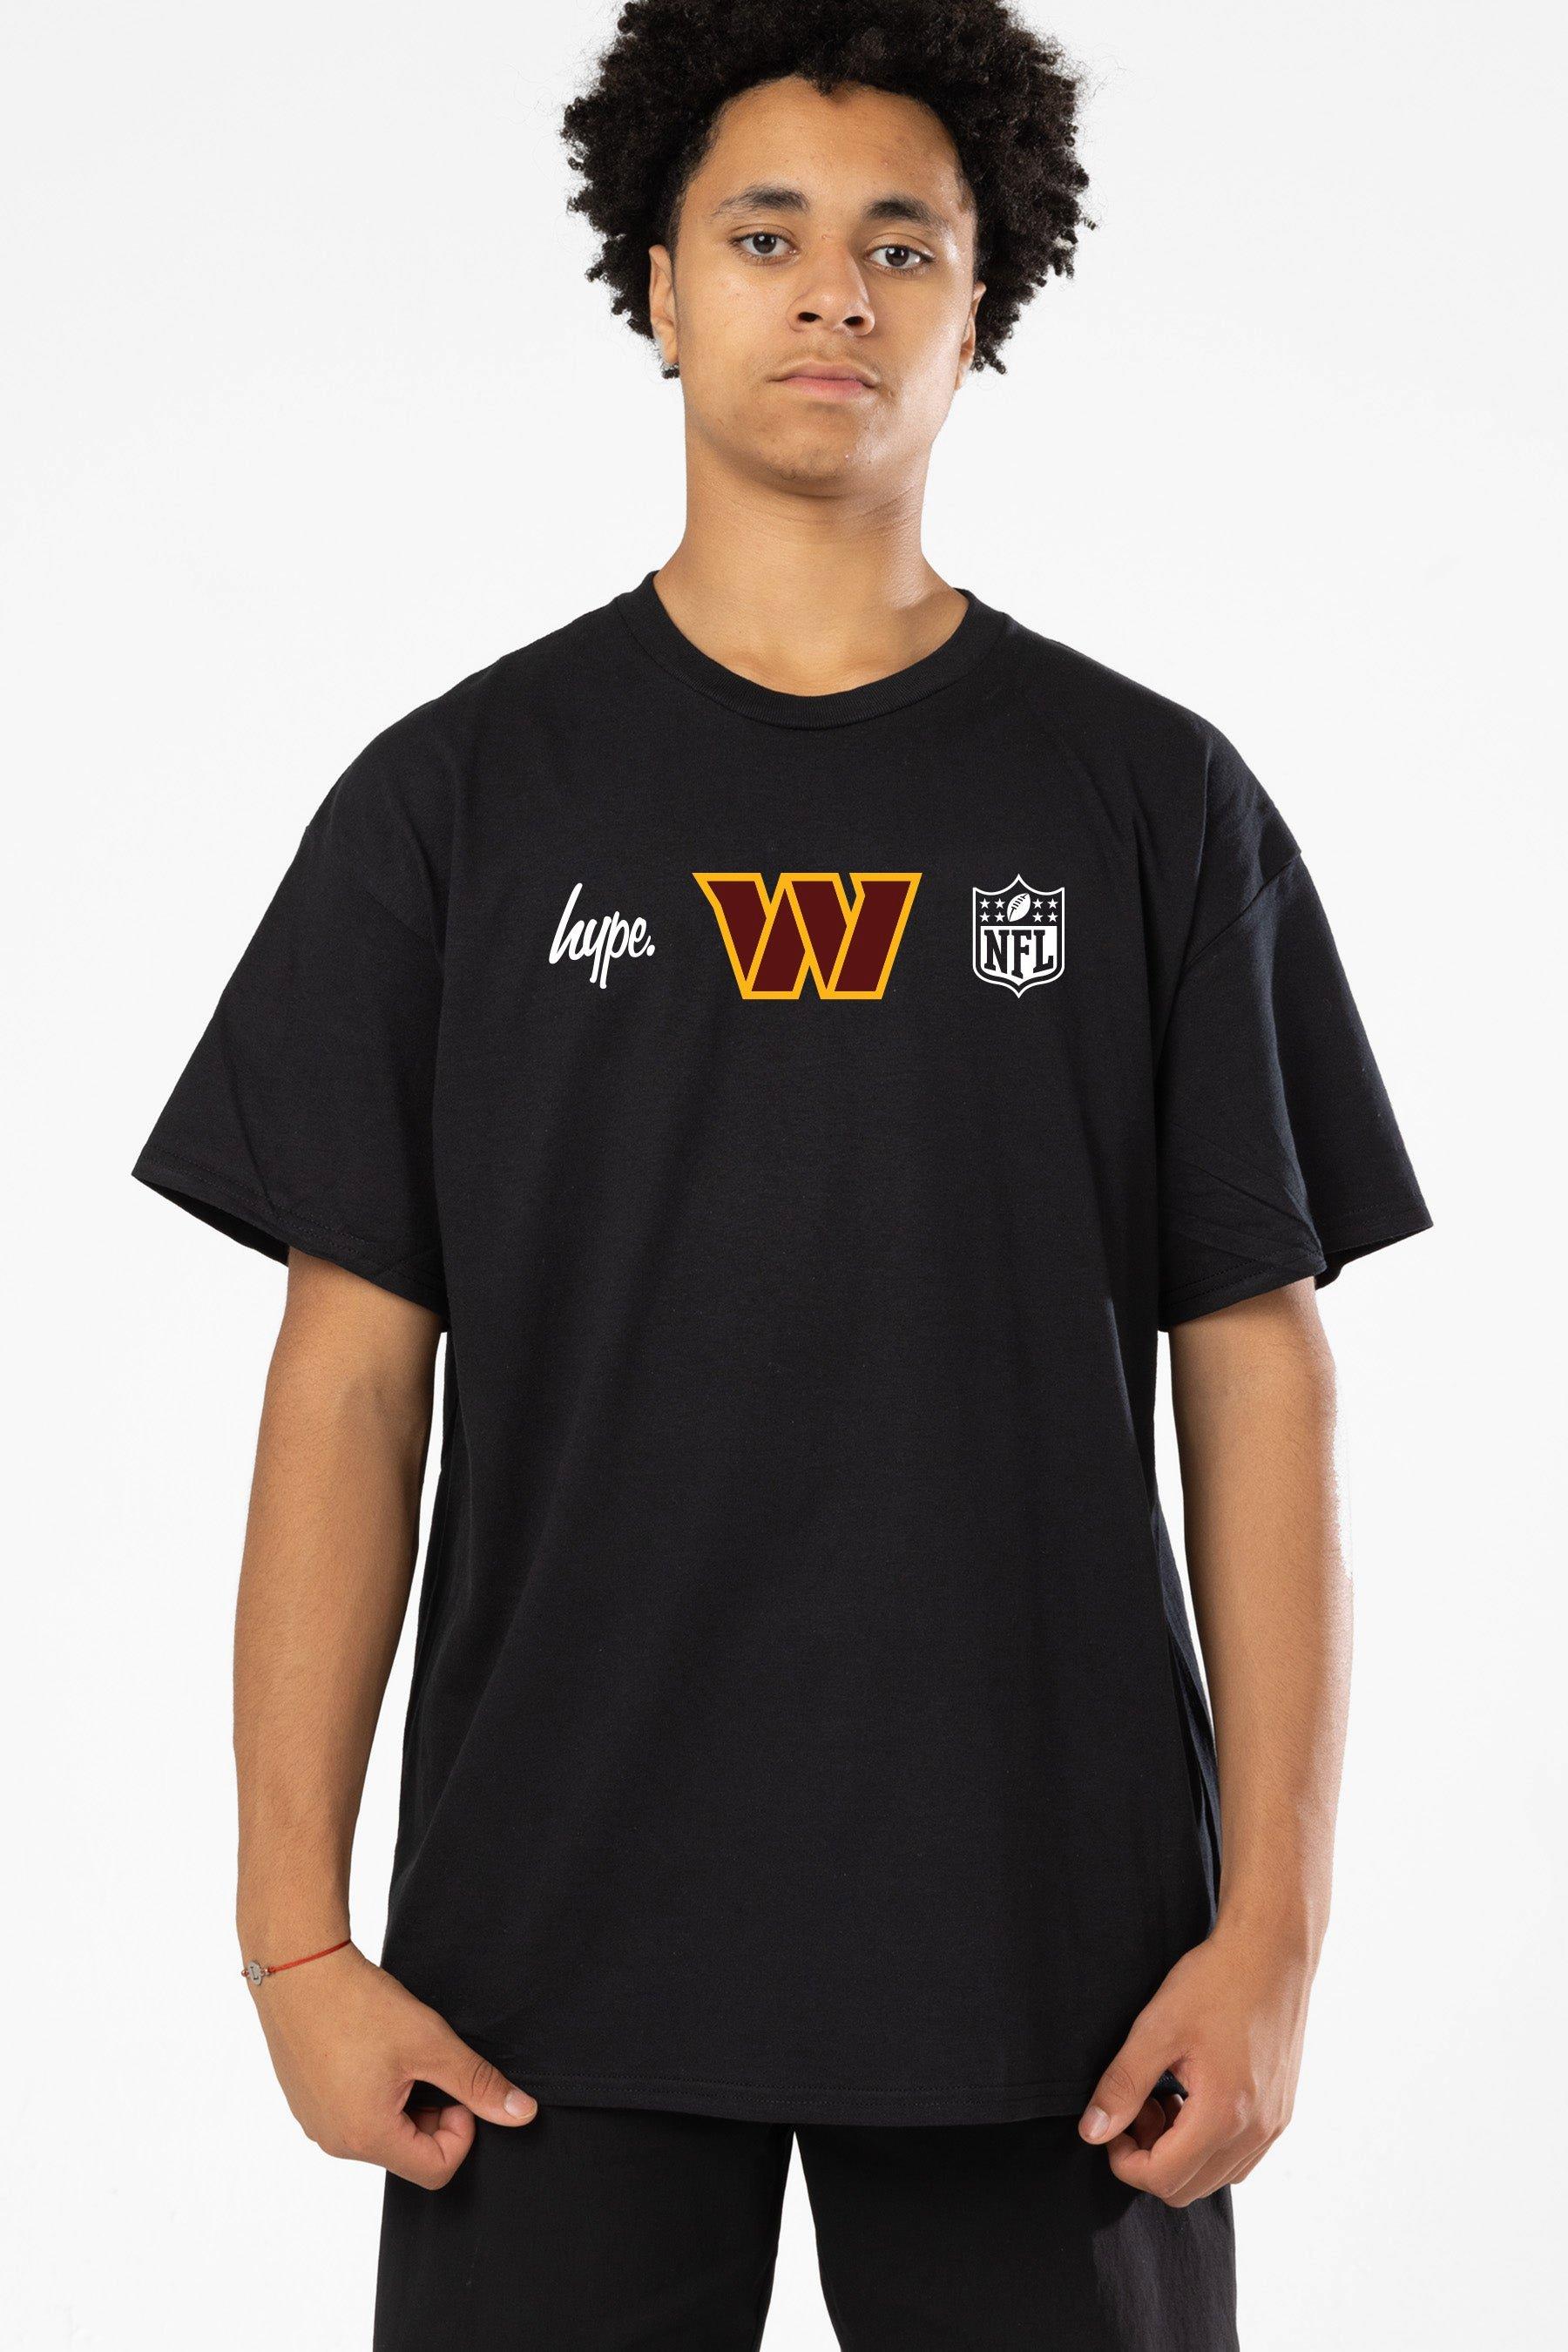 NFL X Washington Commanders T-Shirt